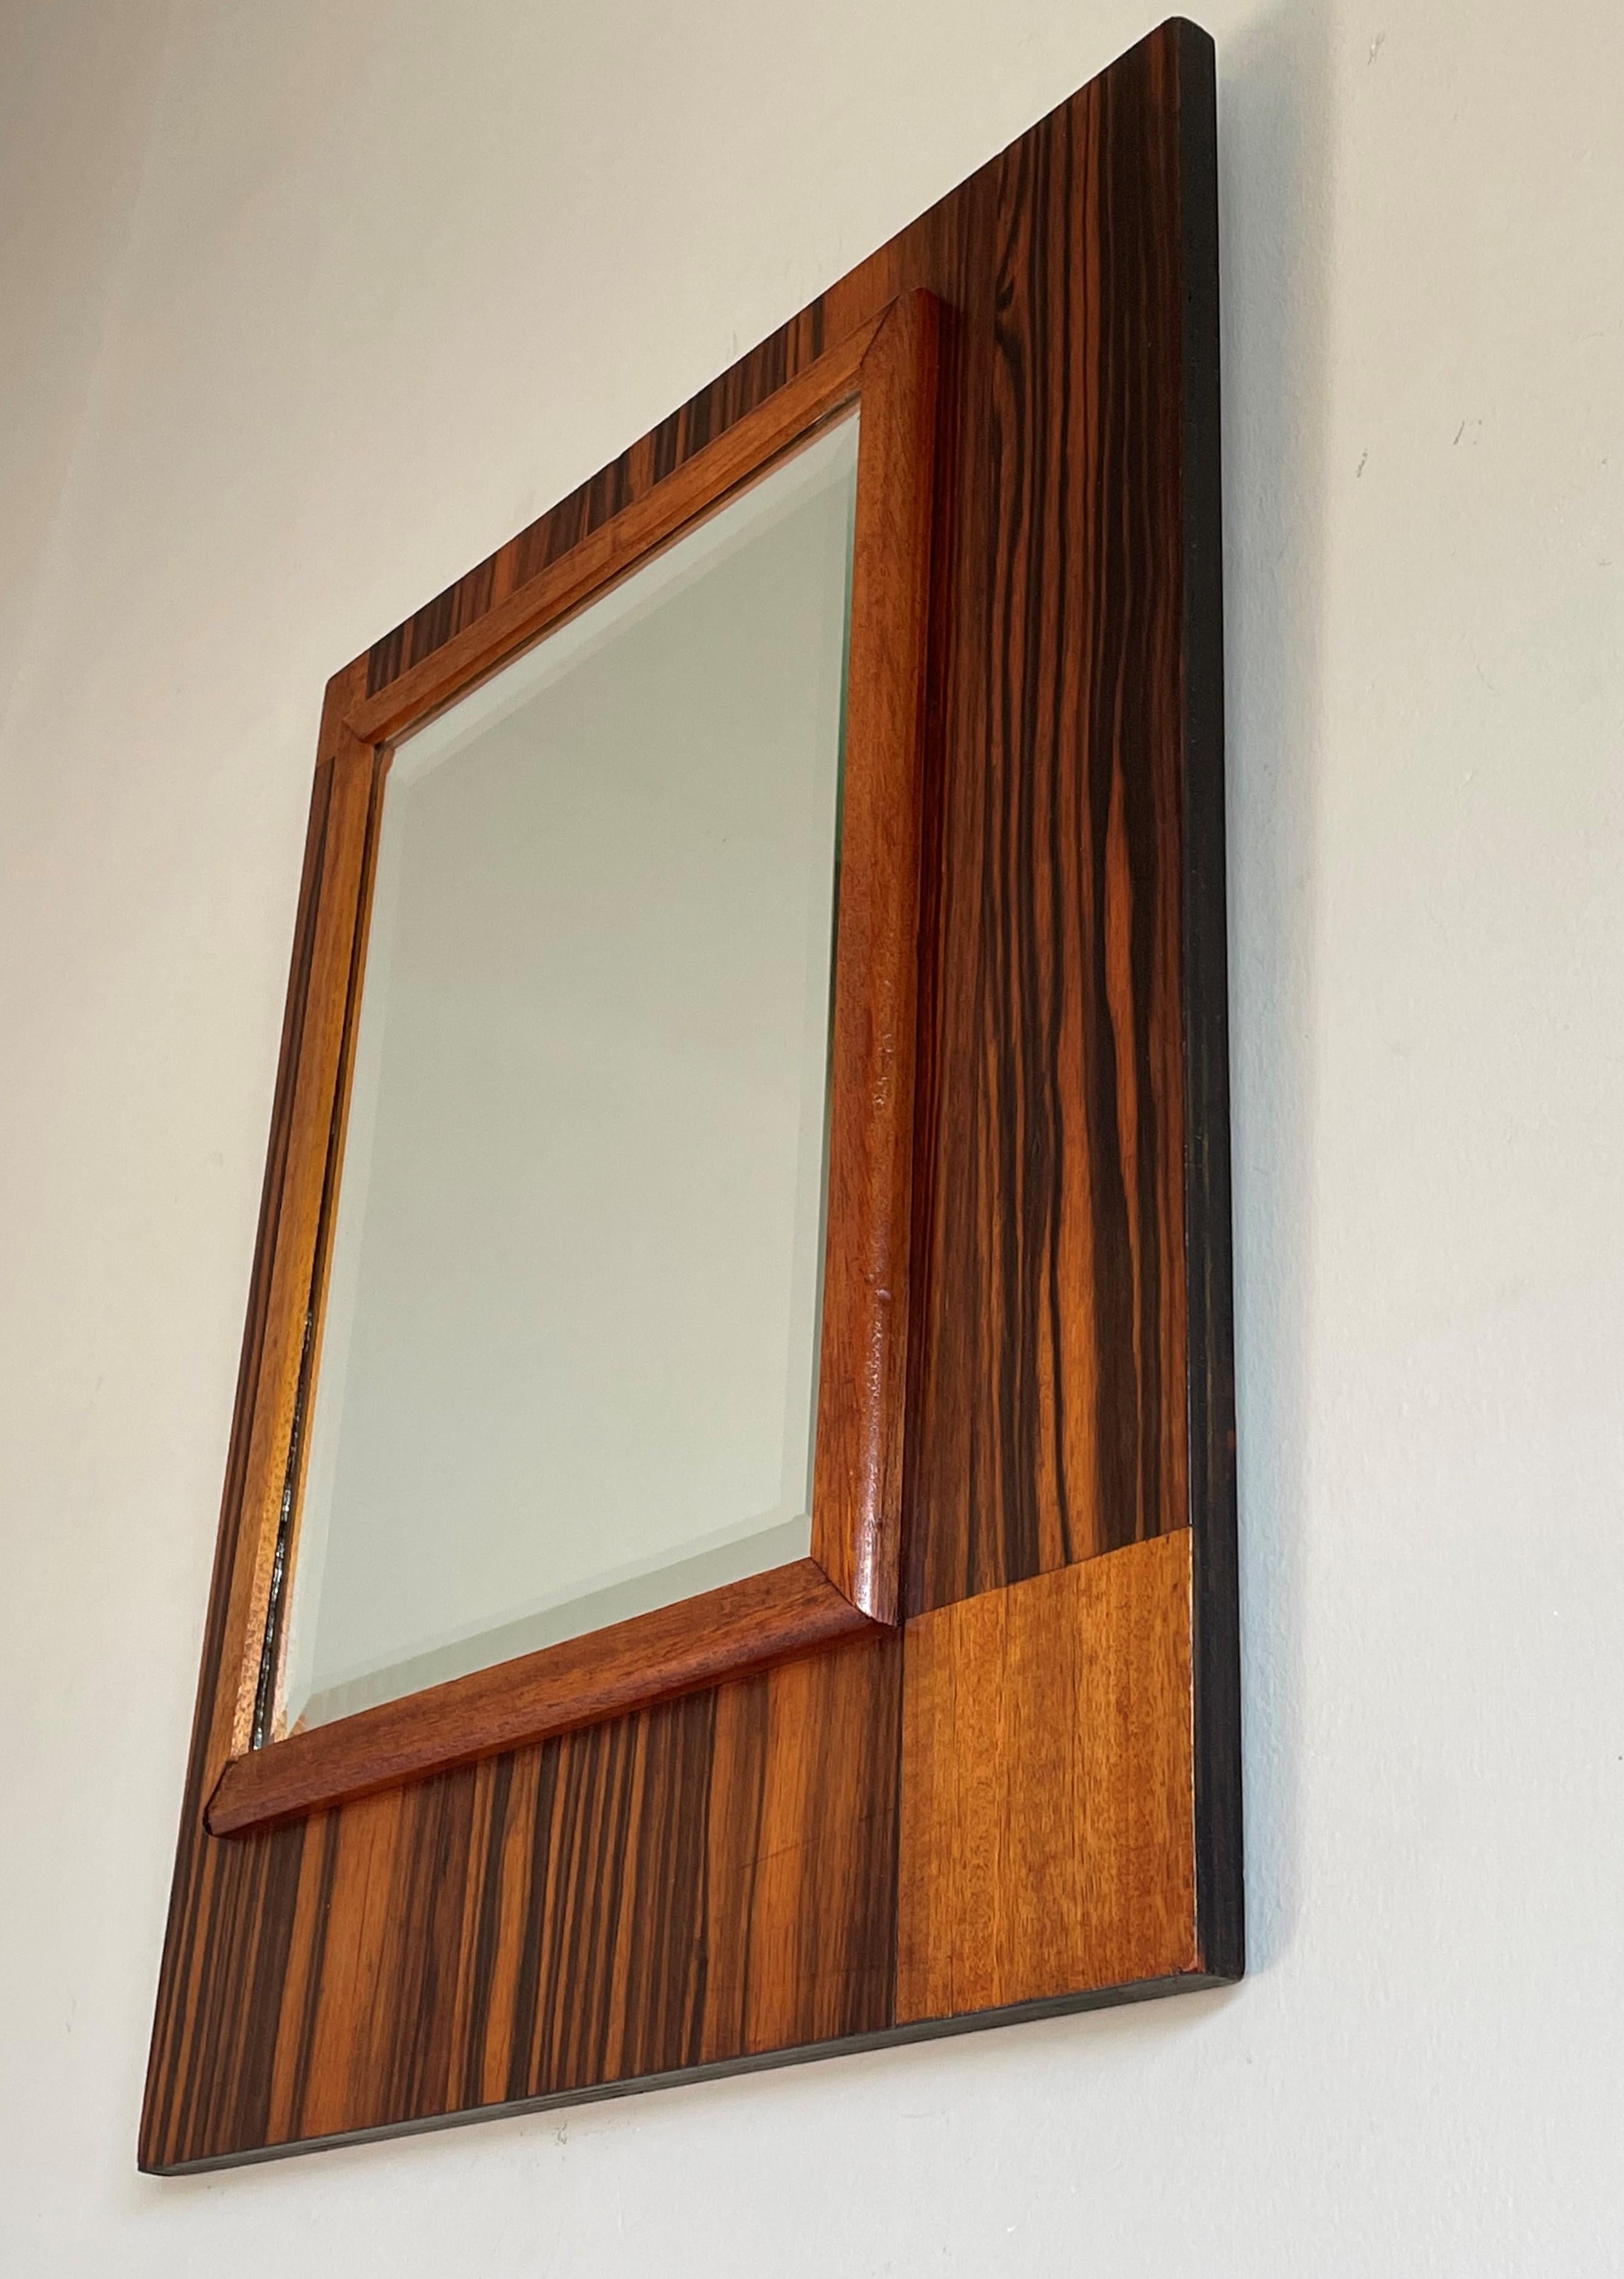 Stunning Geometrical Dutch Art Deco Nutwood and Coromandel Beveled Wall Mirror For Sale 3